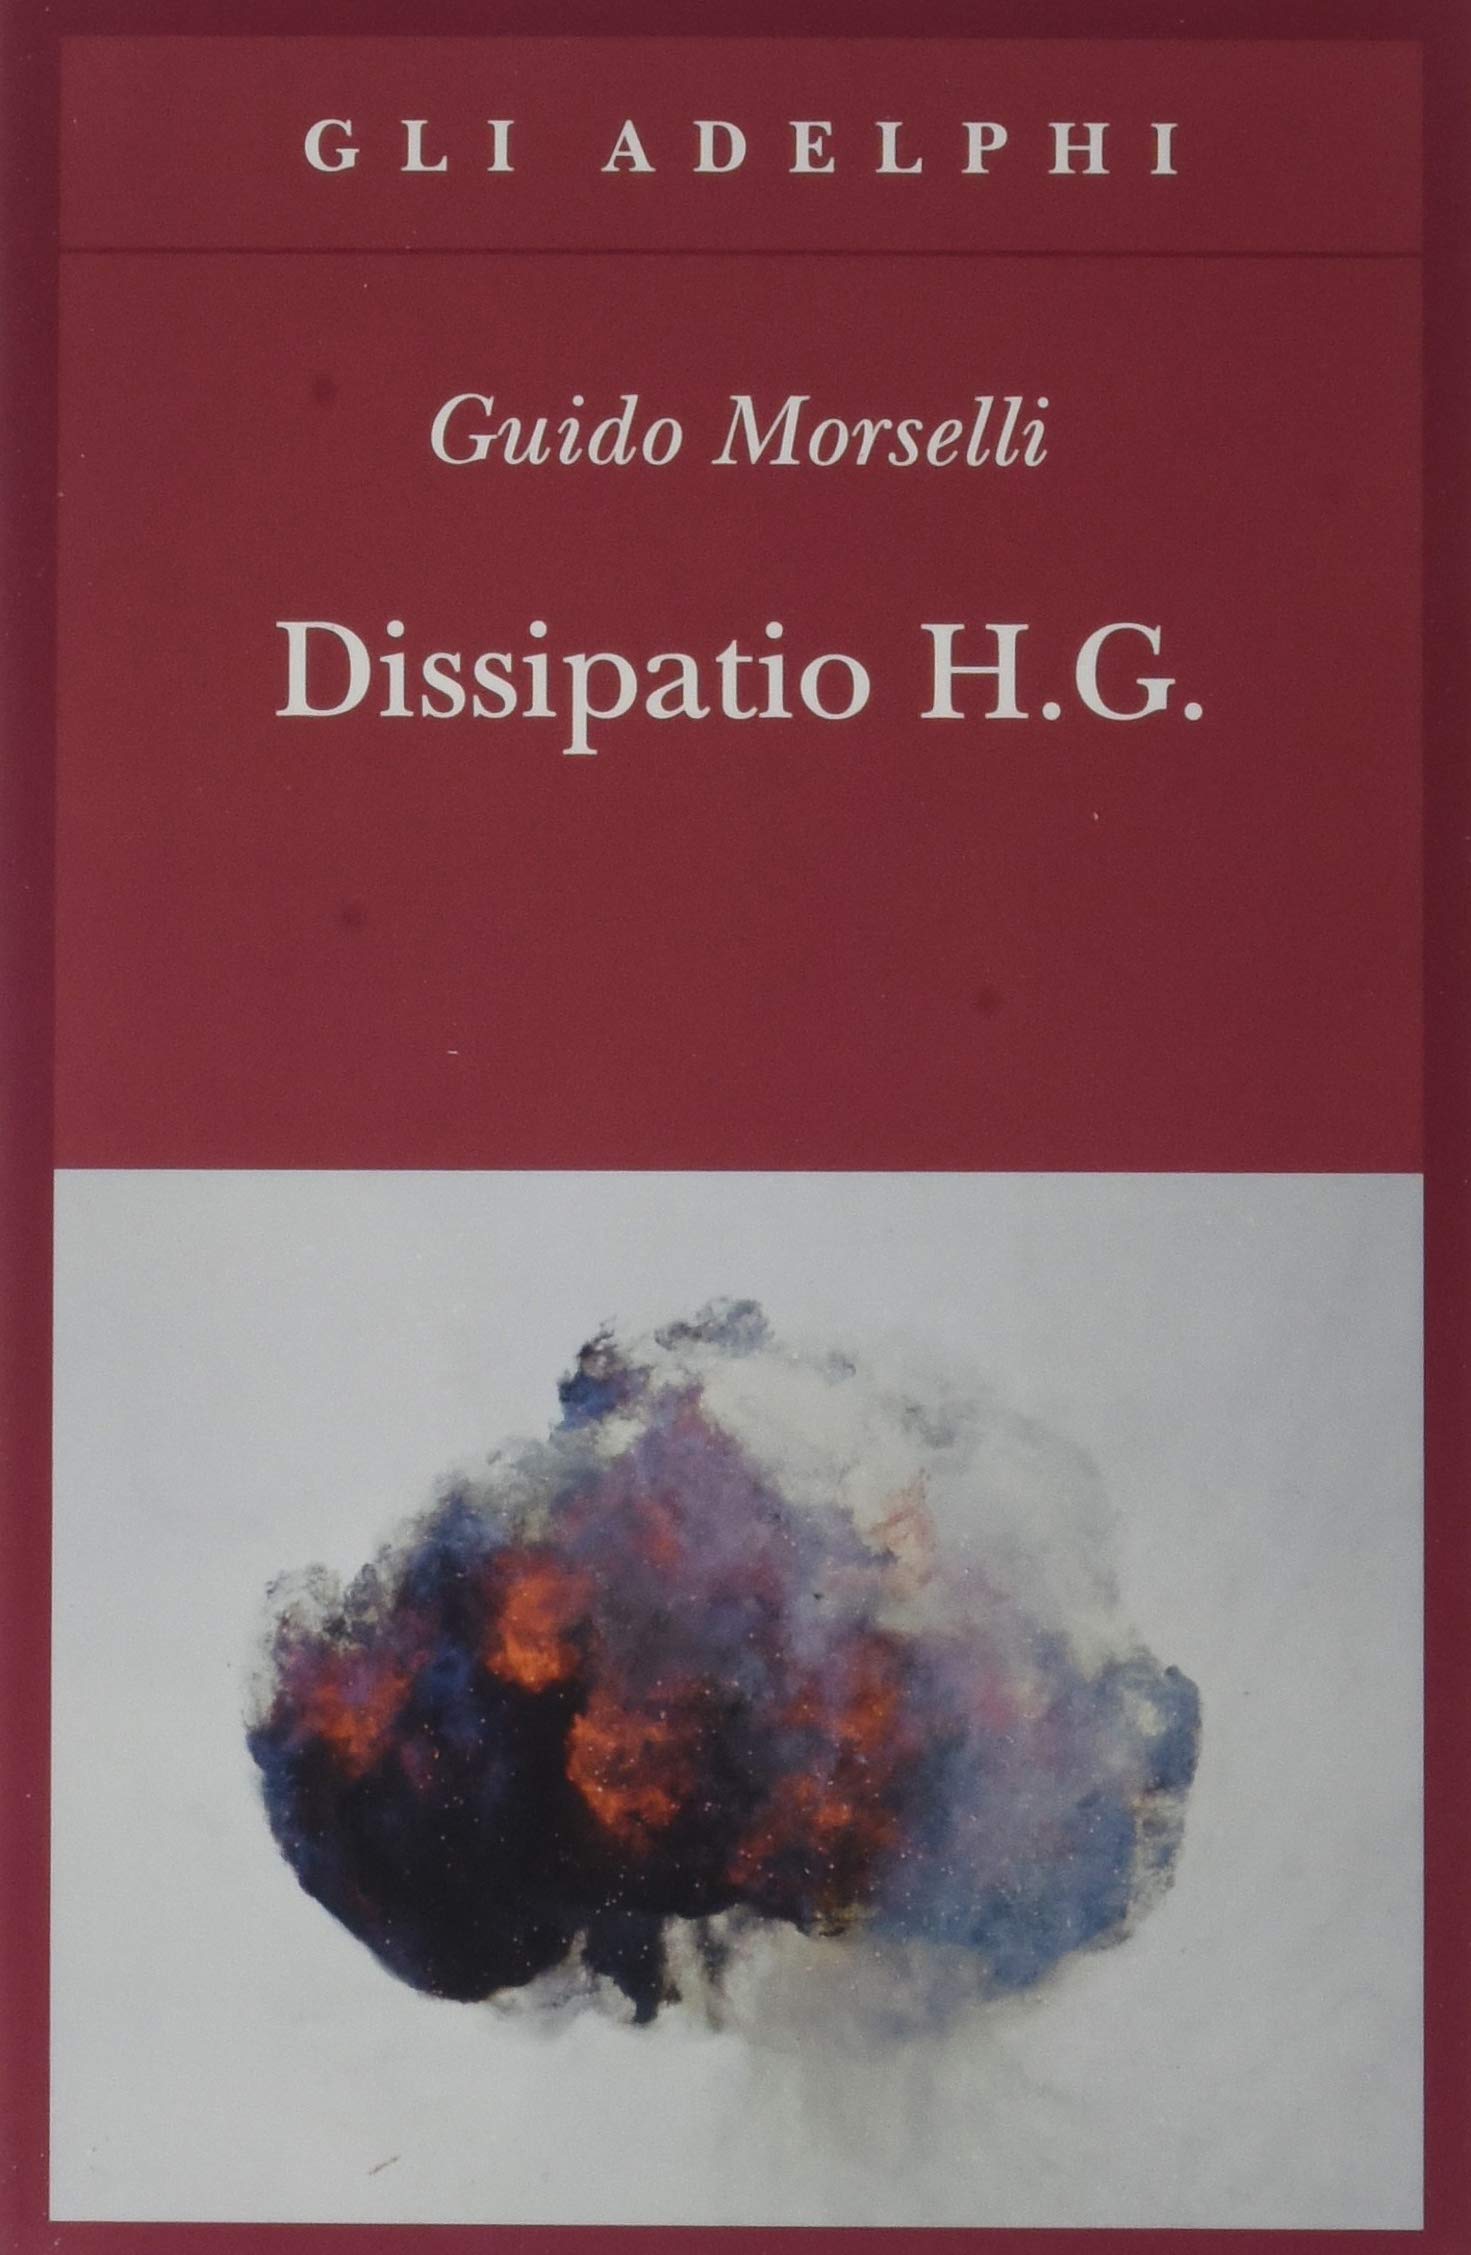 Dissipatio H. G. (Paperback, Italiano language, 2012, Adelphi)